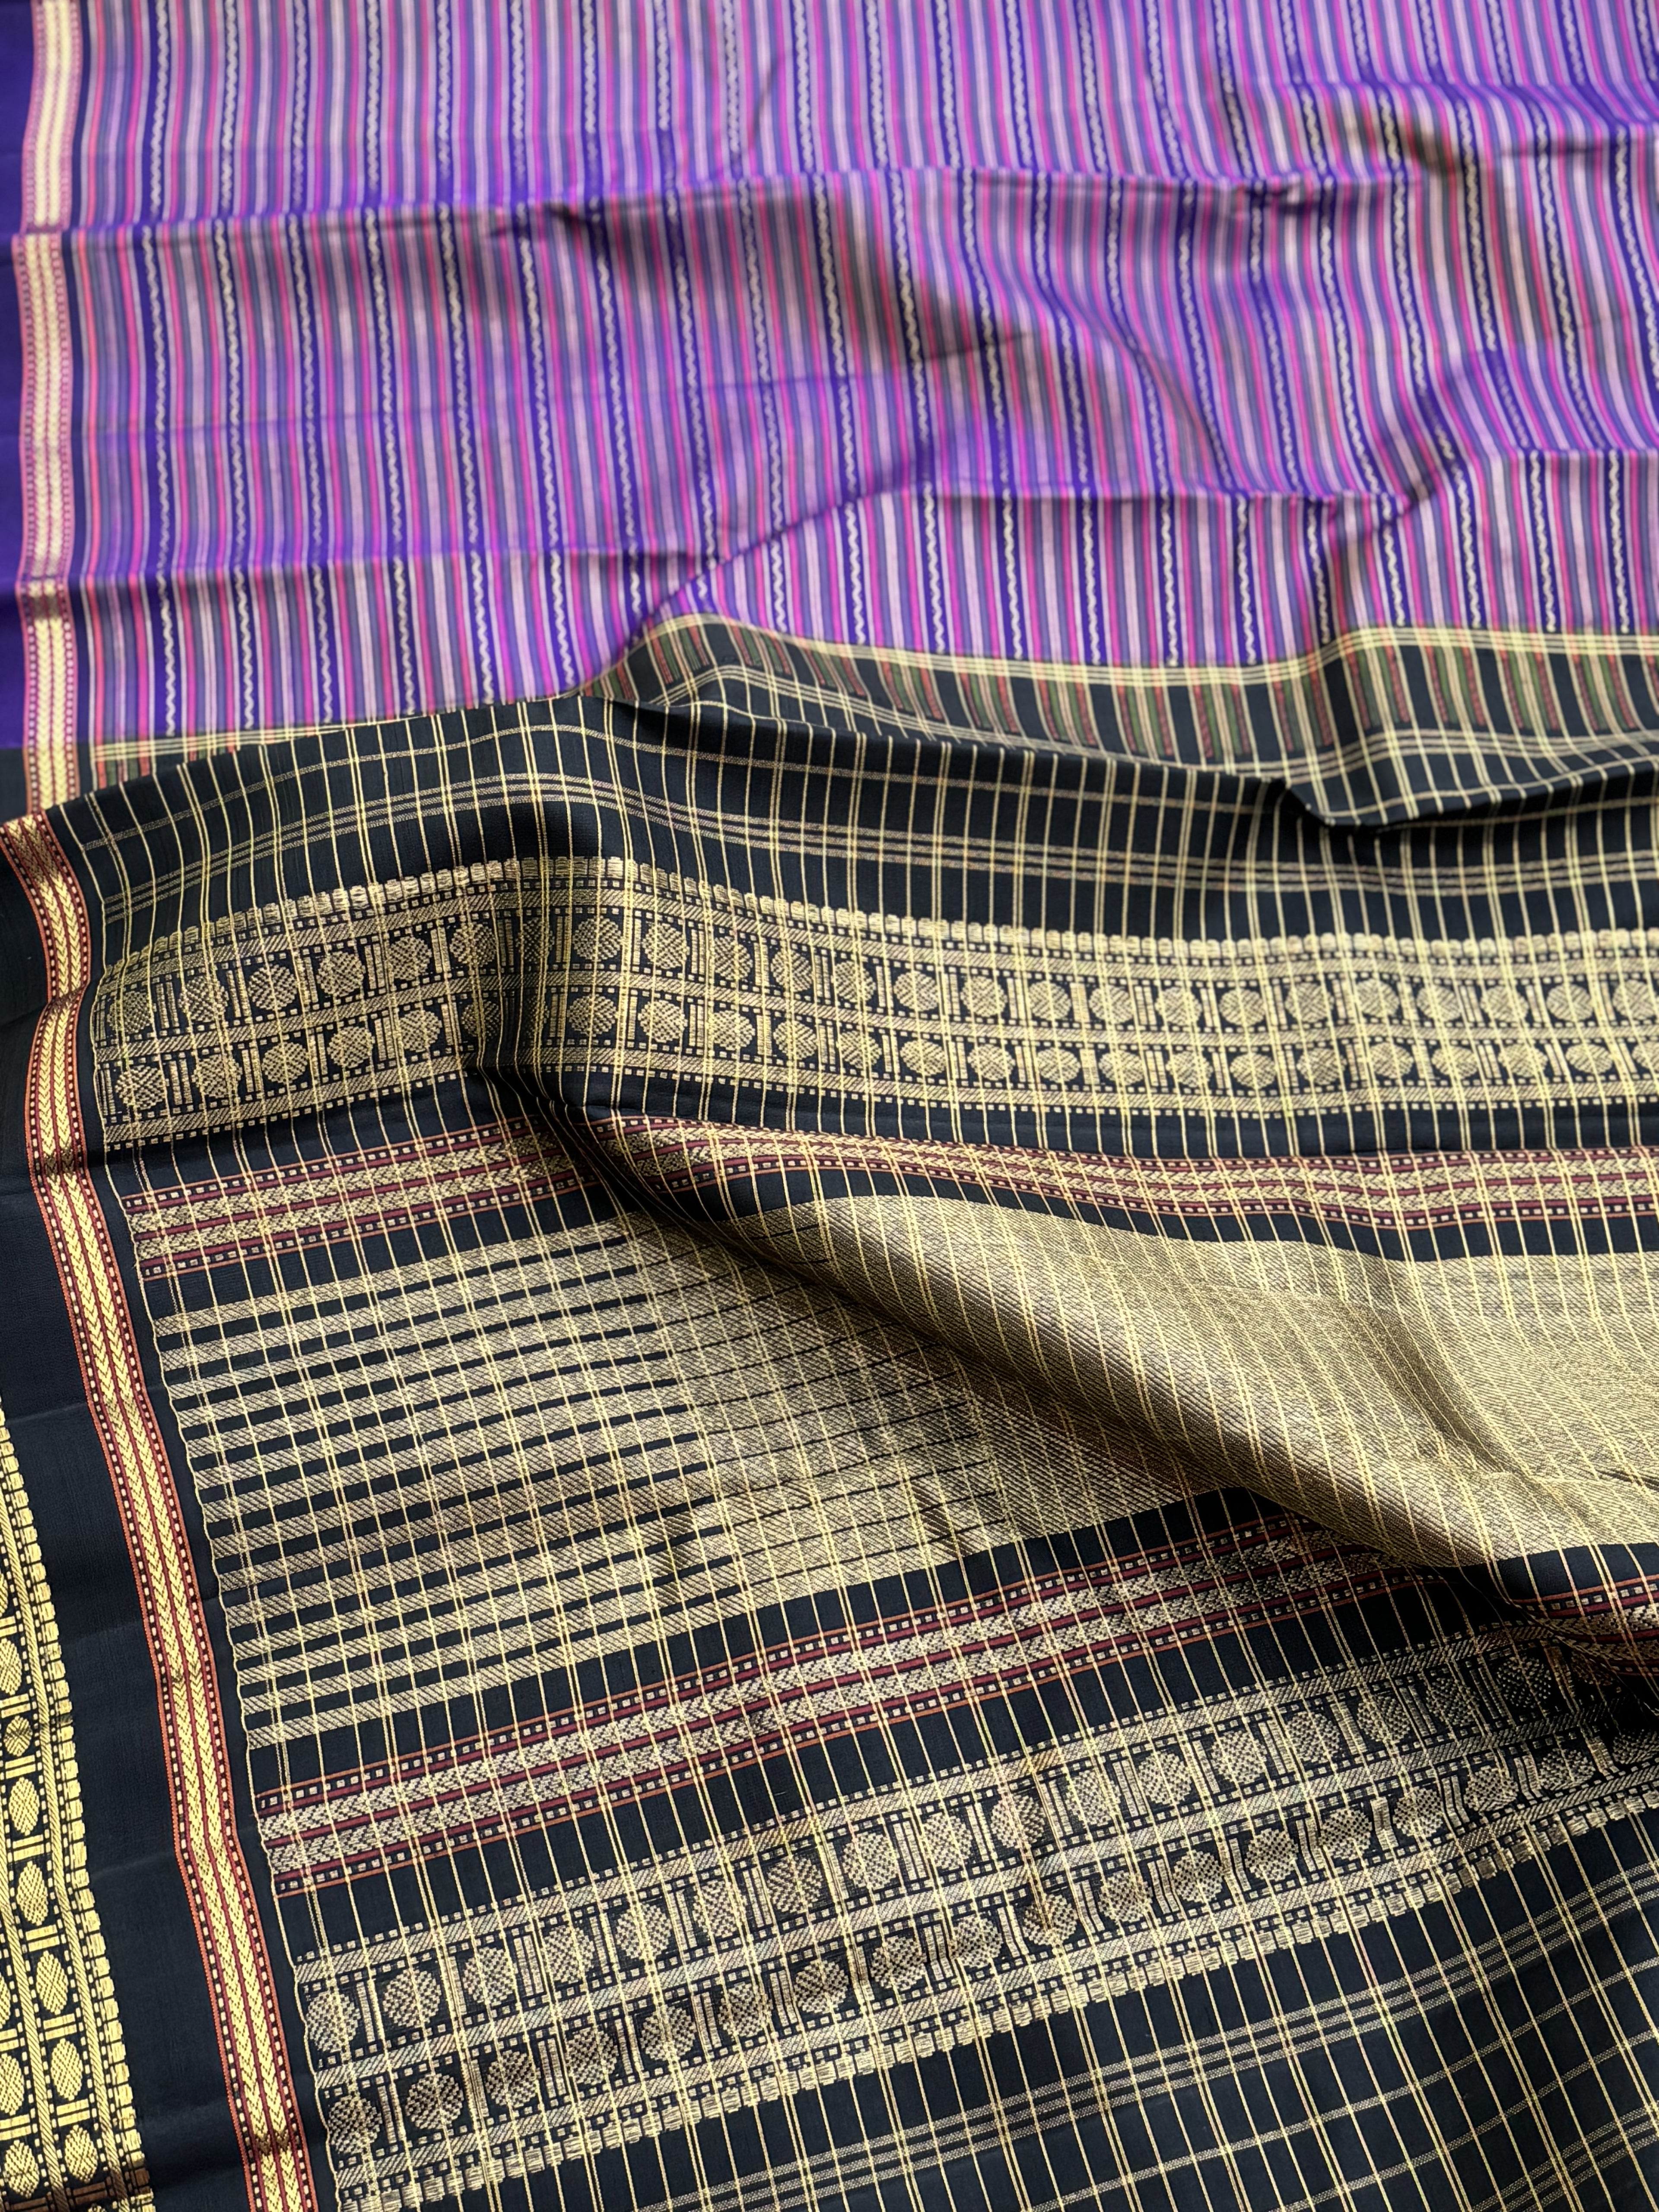 A stunner varisaipettu kanchivaram silk saree in purple with black